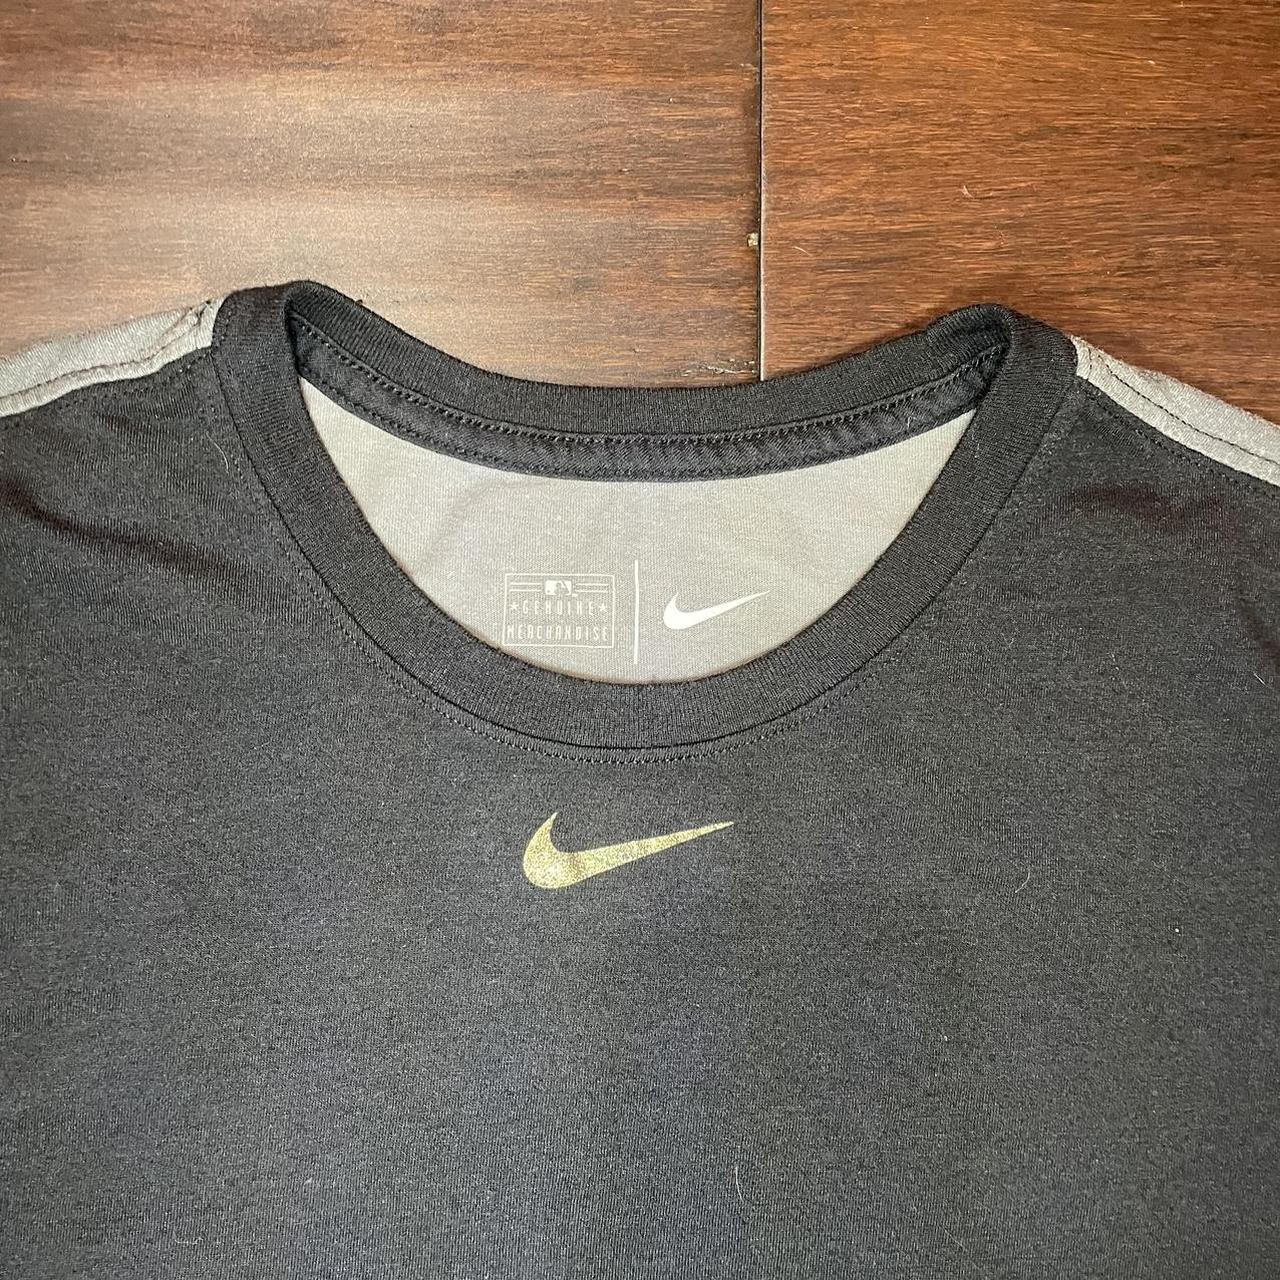 Nike Griffey baseball shirt - Depop